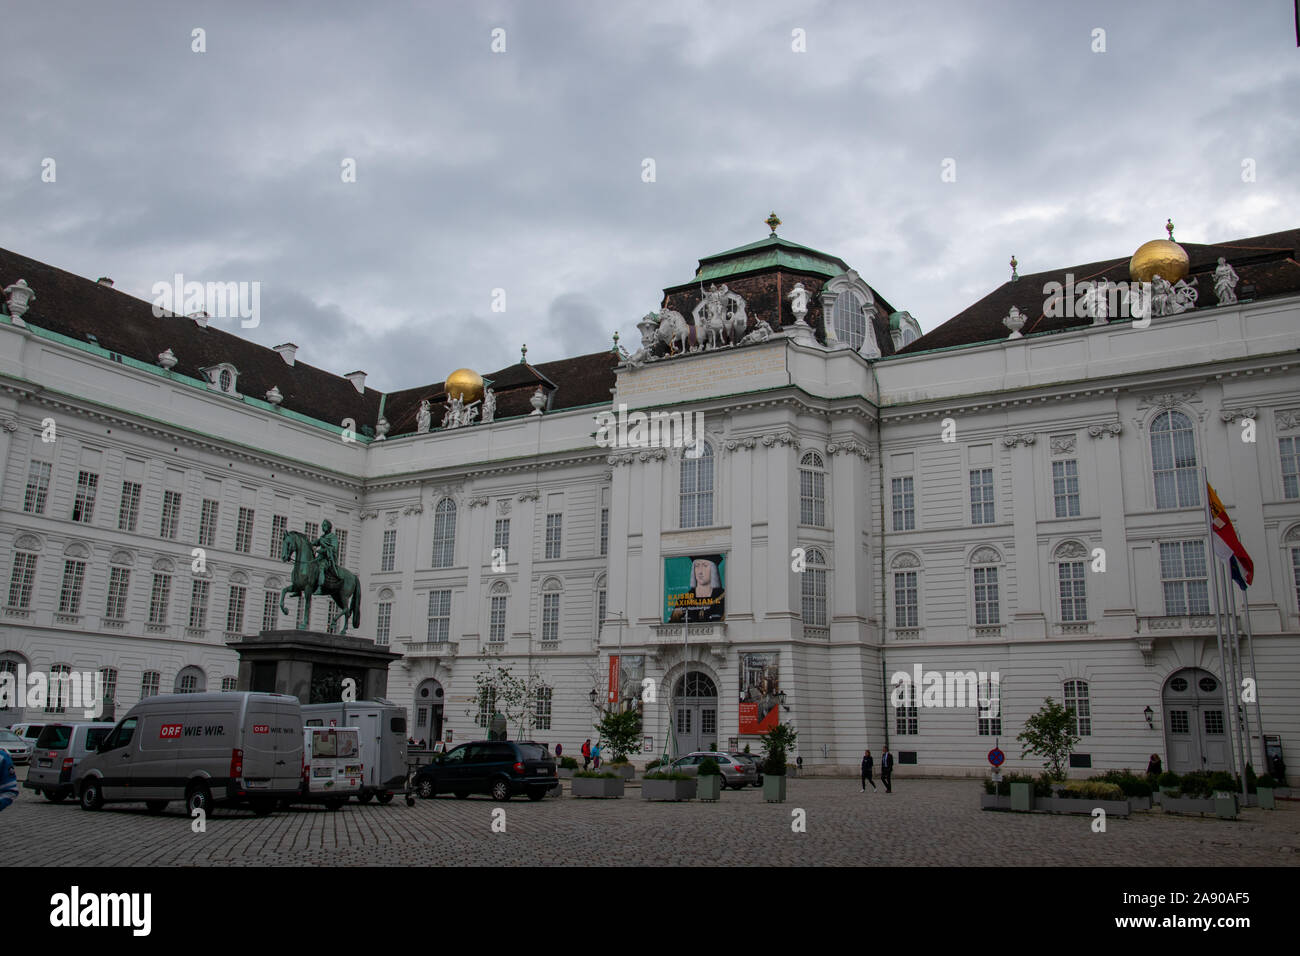 The Courtyard at the Imperial Court Library (German: Kaiserliche Hofbibliothek); Vienna, Austria. Stock Photo